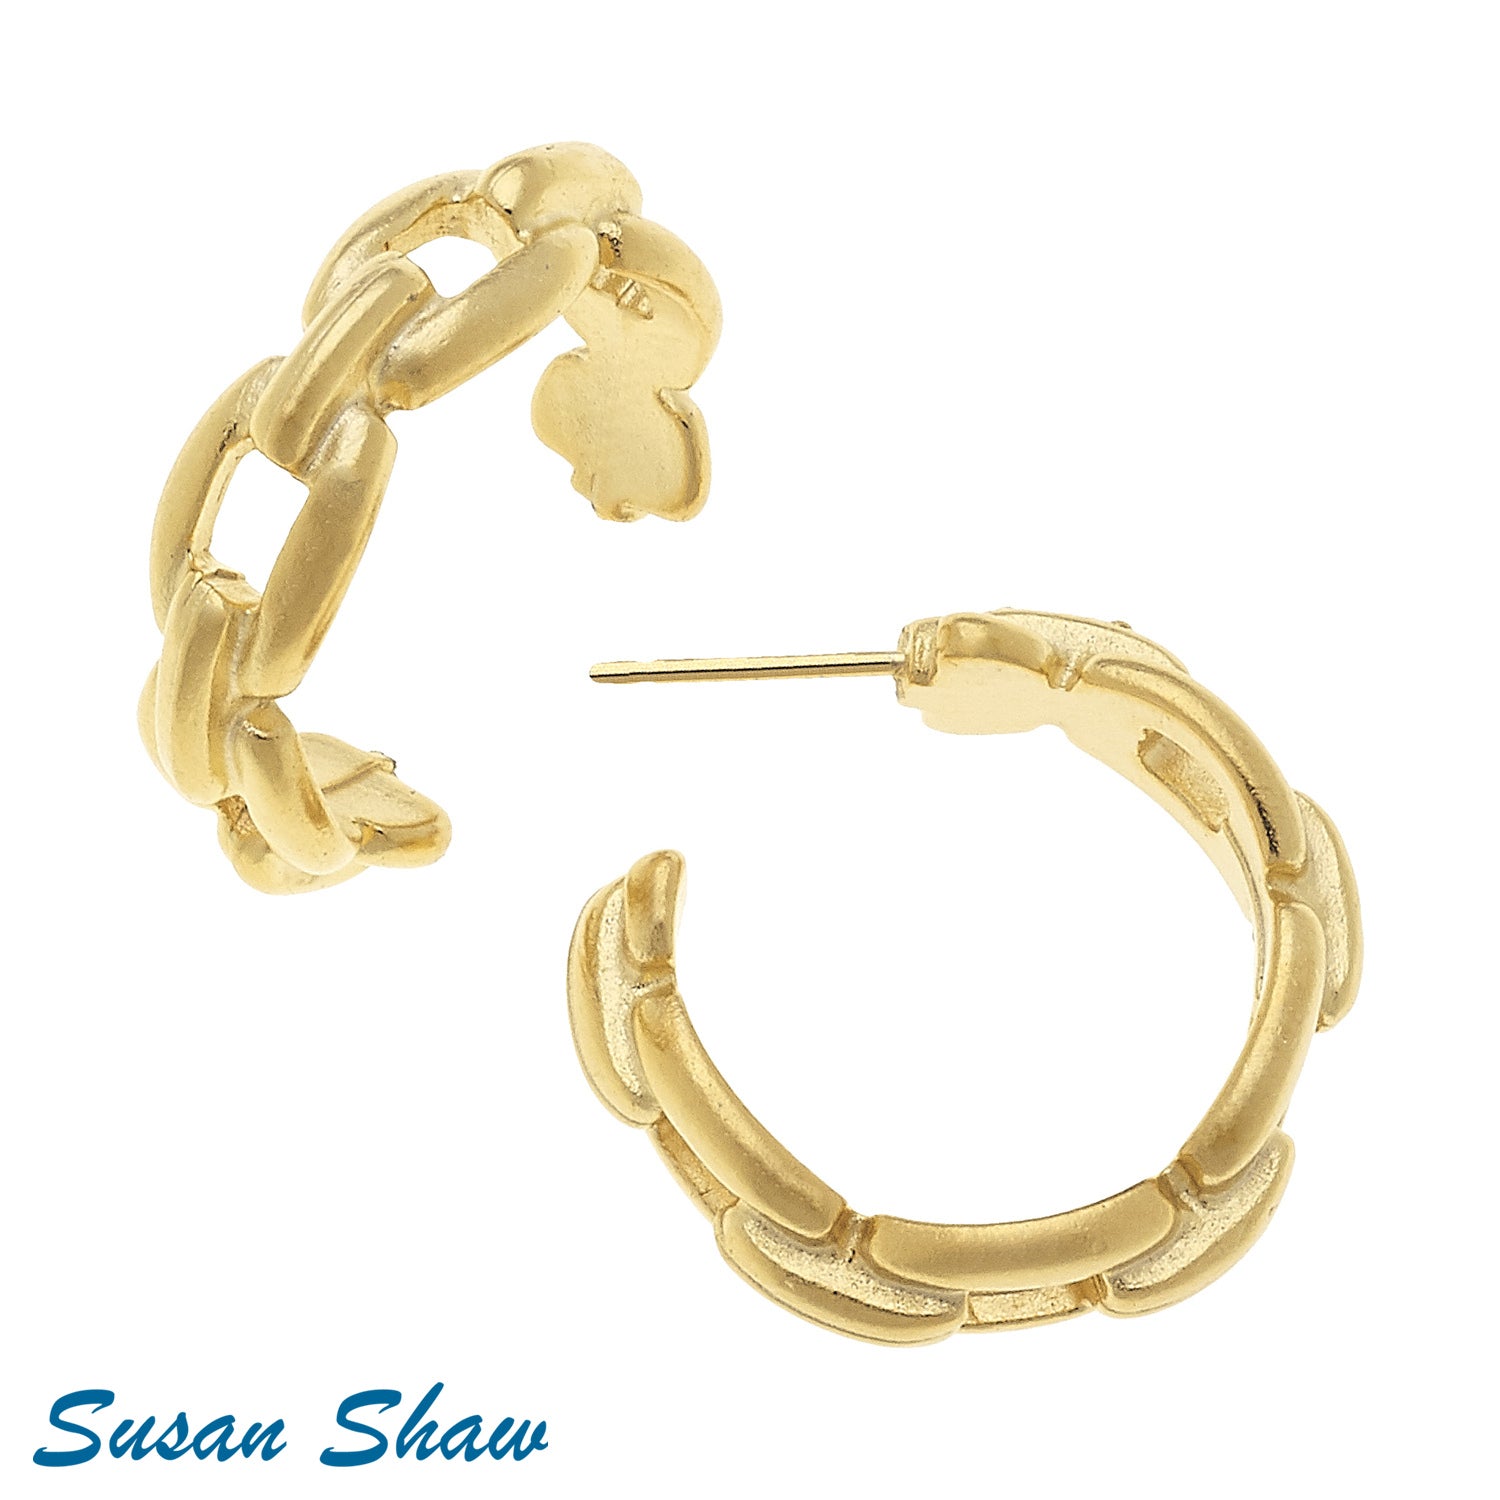 Susan Shaw Mini Chain Hoops.